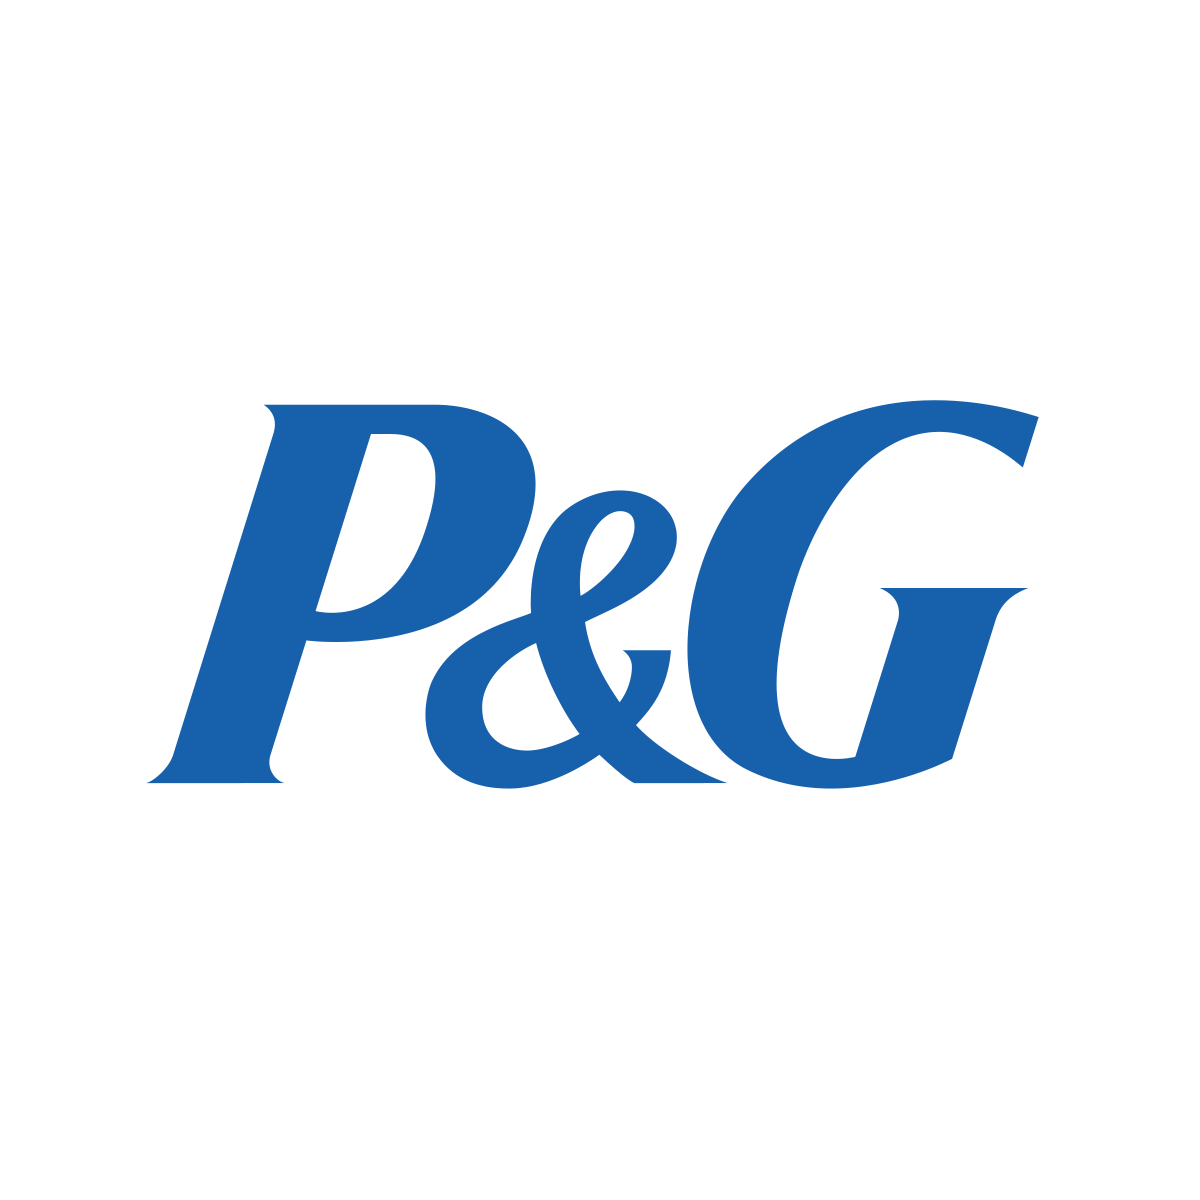 Procter & Gamble Germany GmbH & Co Operations oHG